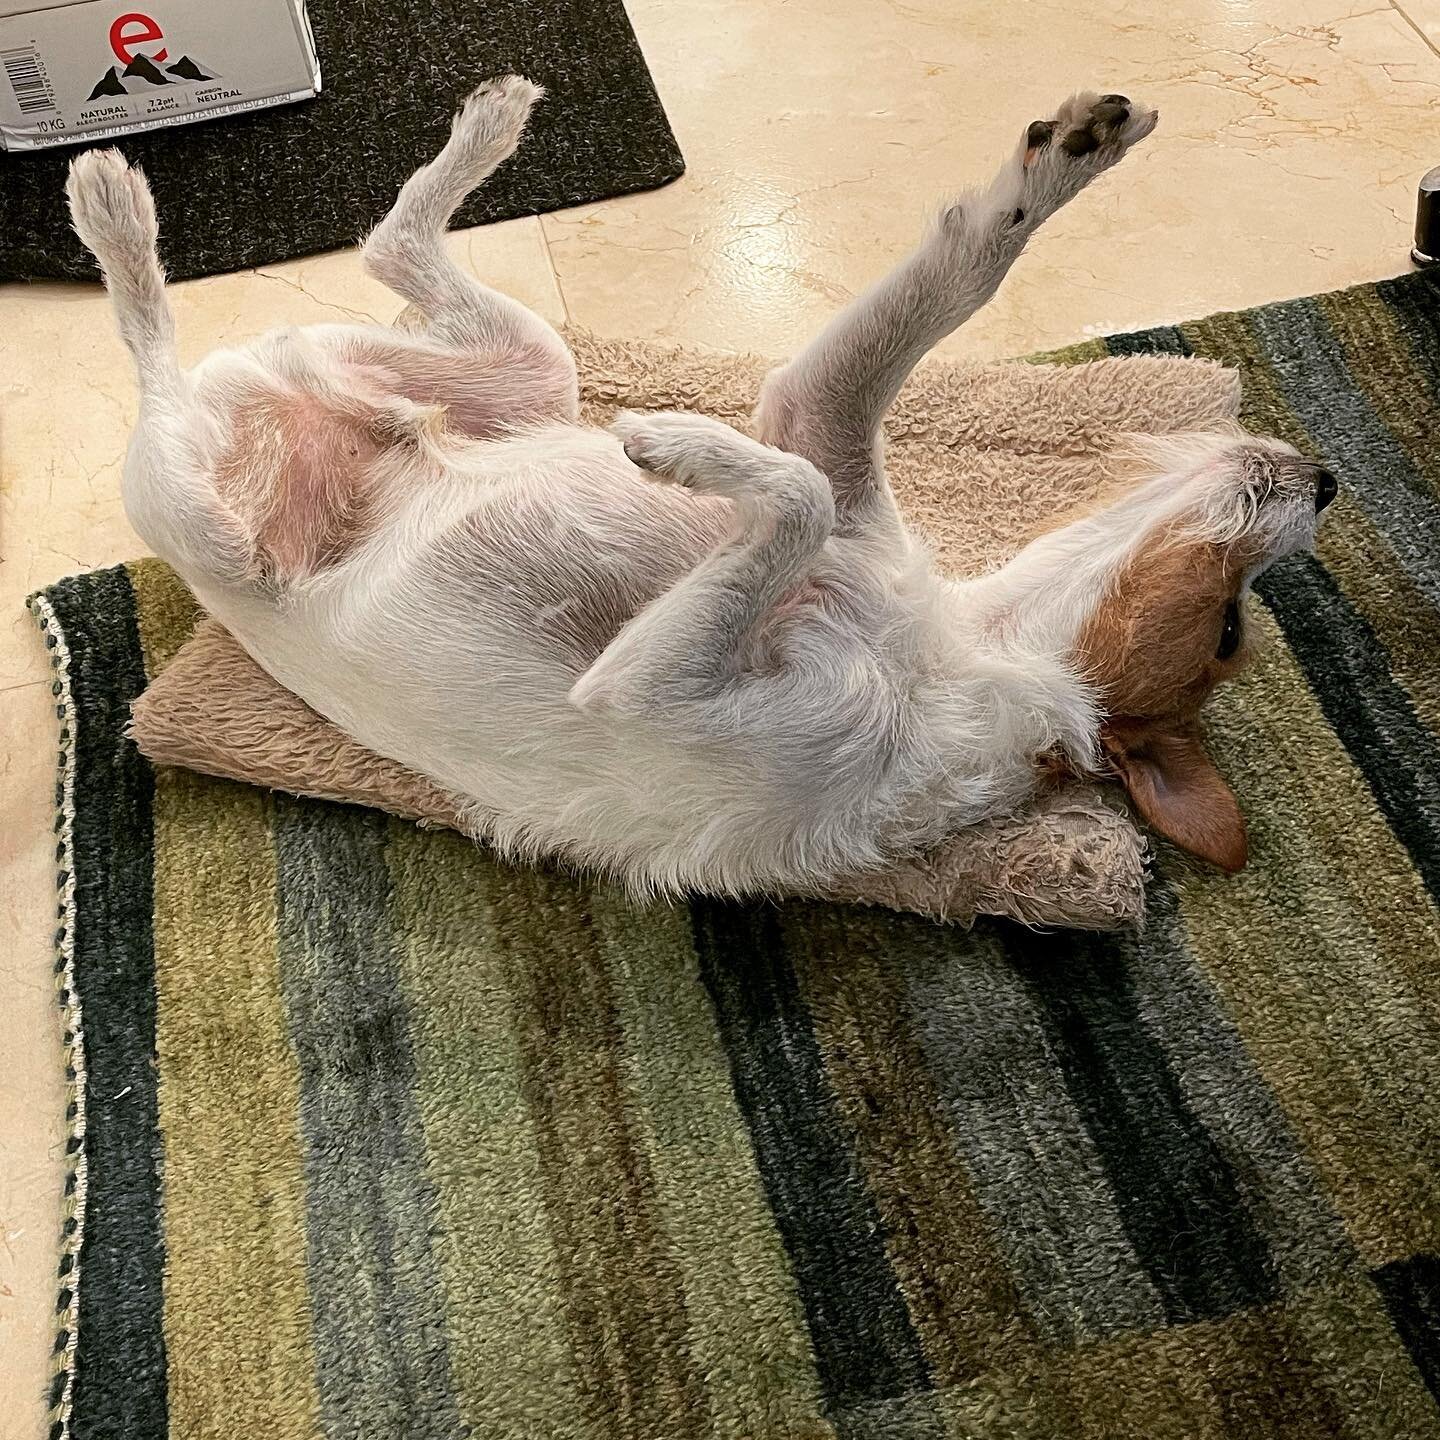 Cooper is clearly enjoying a #lazysunday&hellip; #dogsofinstagram #jackrussellterrier #keyslife